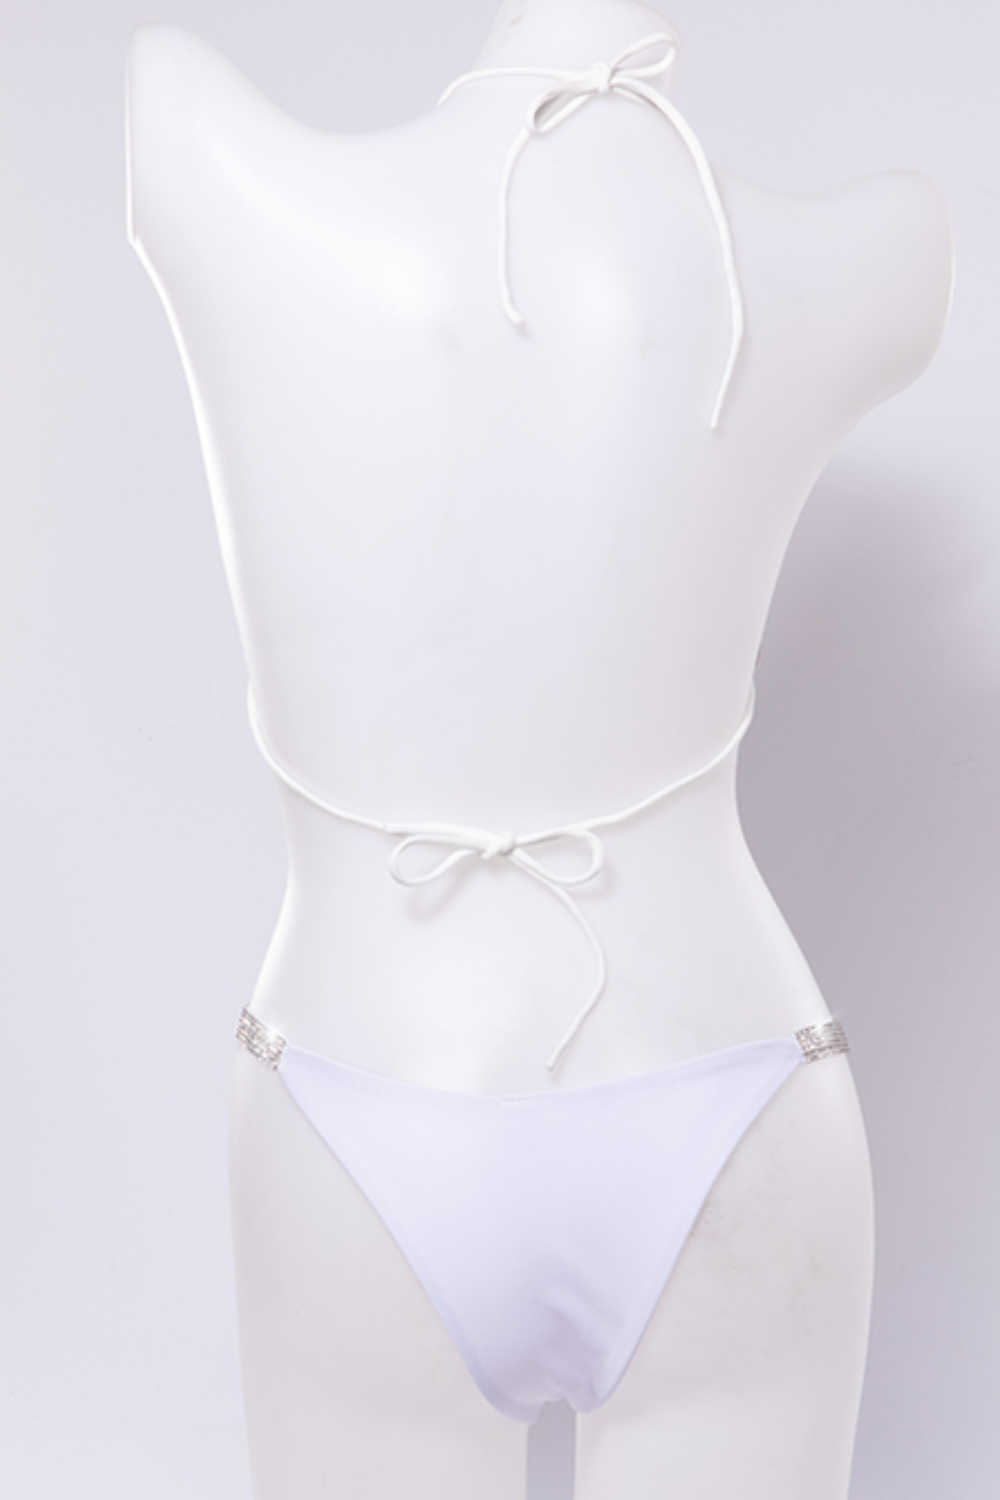 Bling Fling Jeweled Bikini Set - White